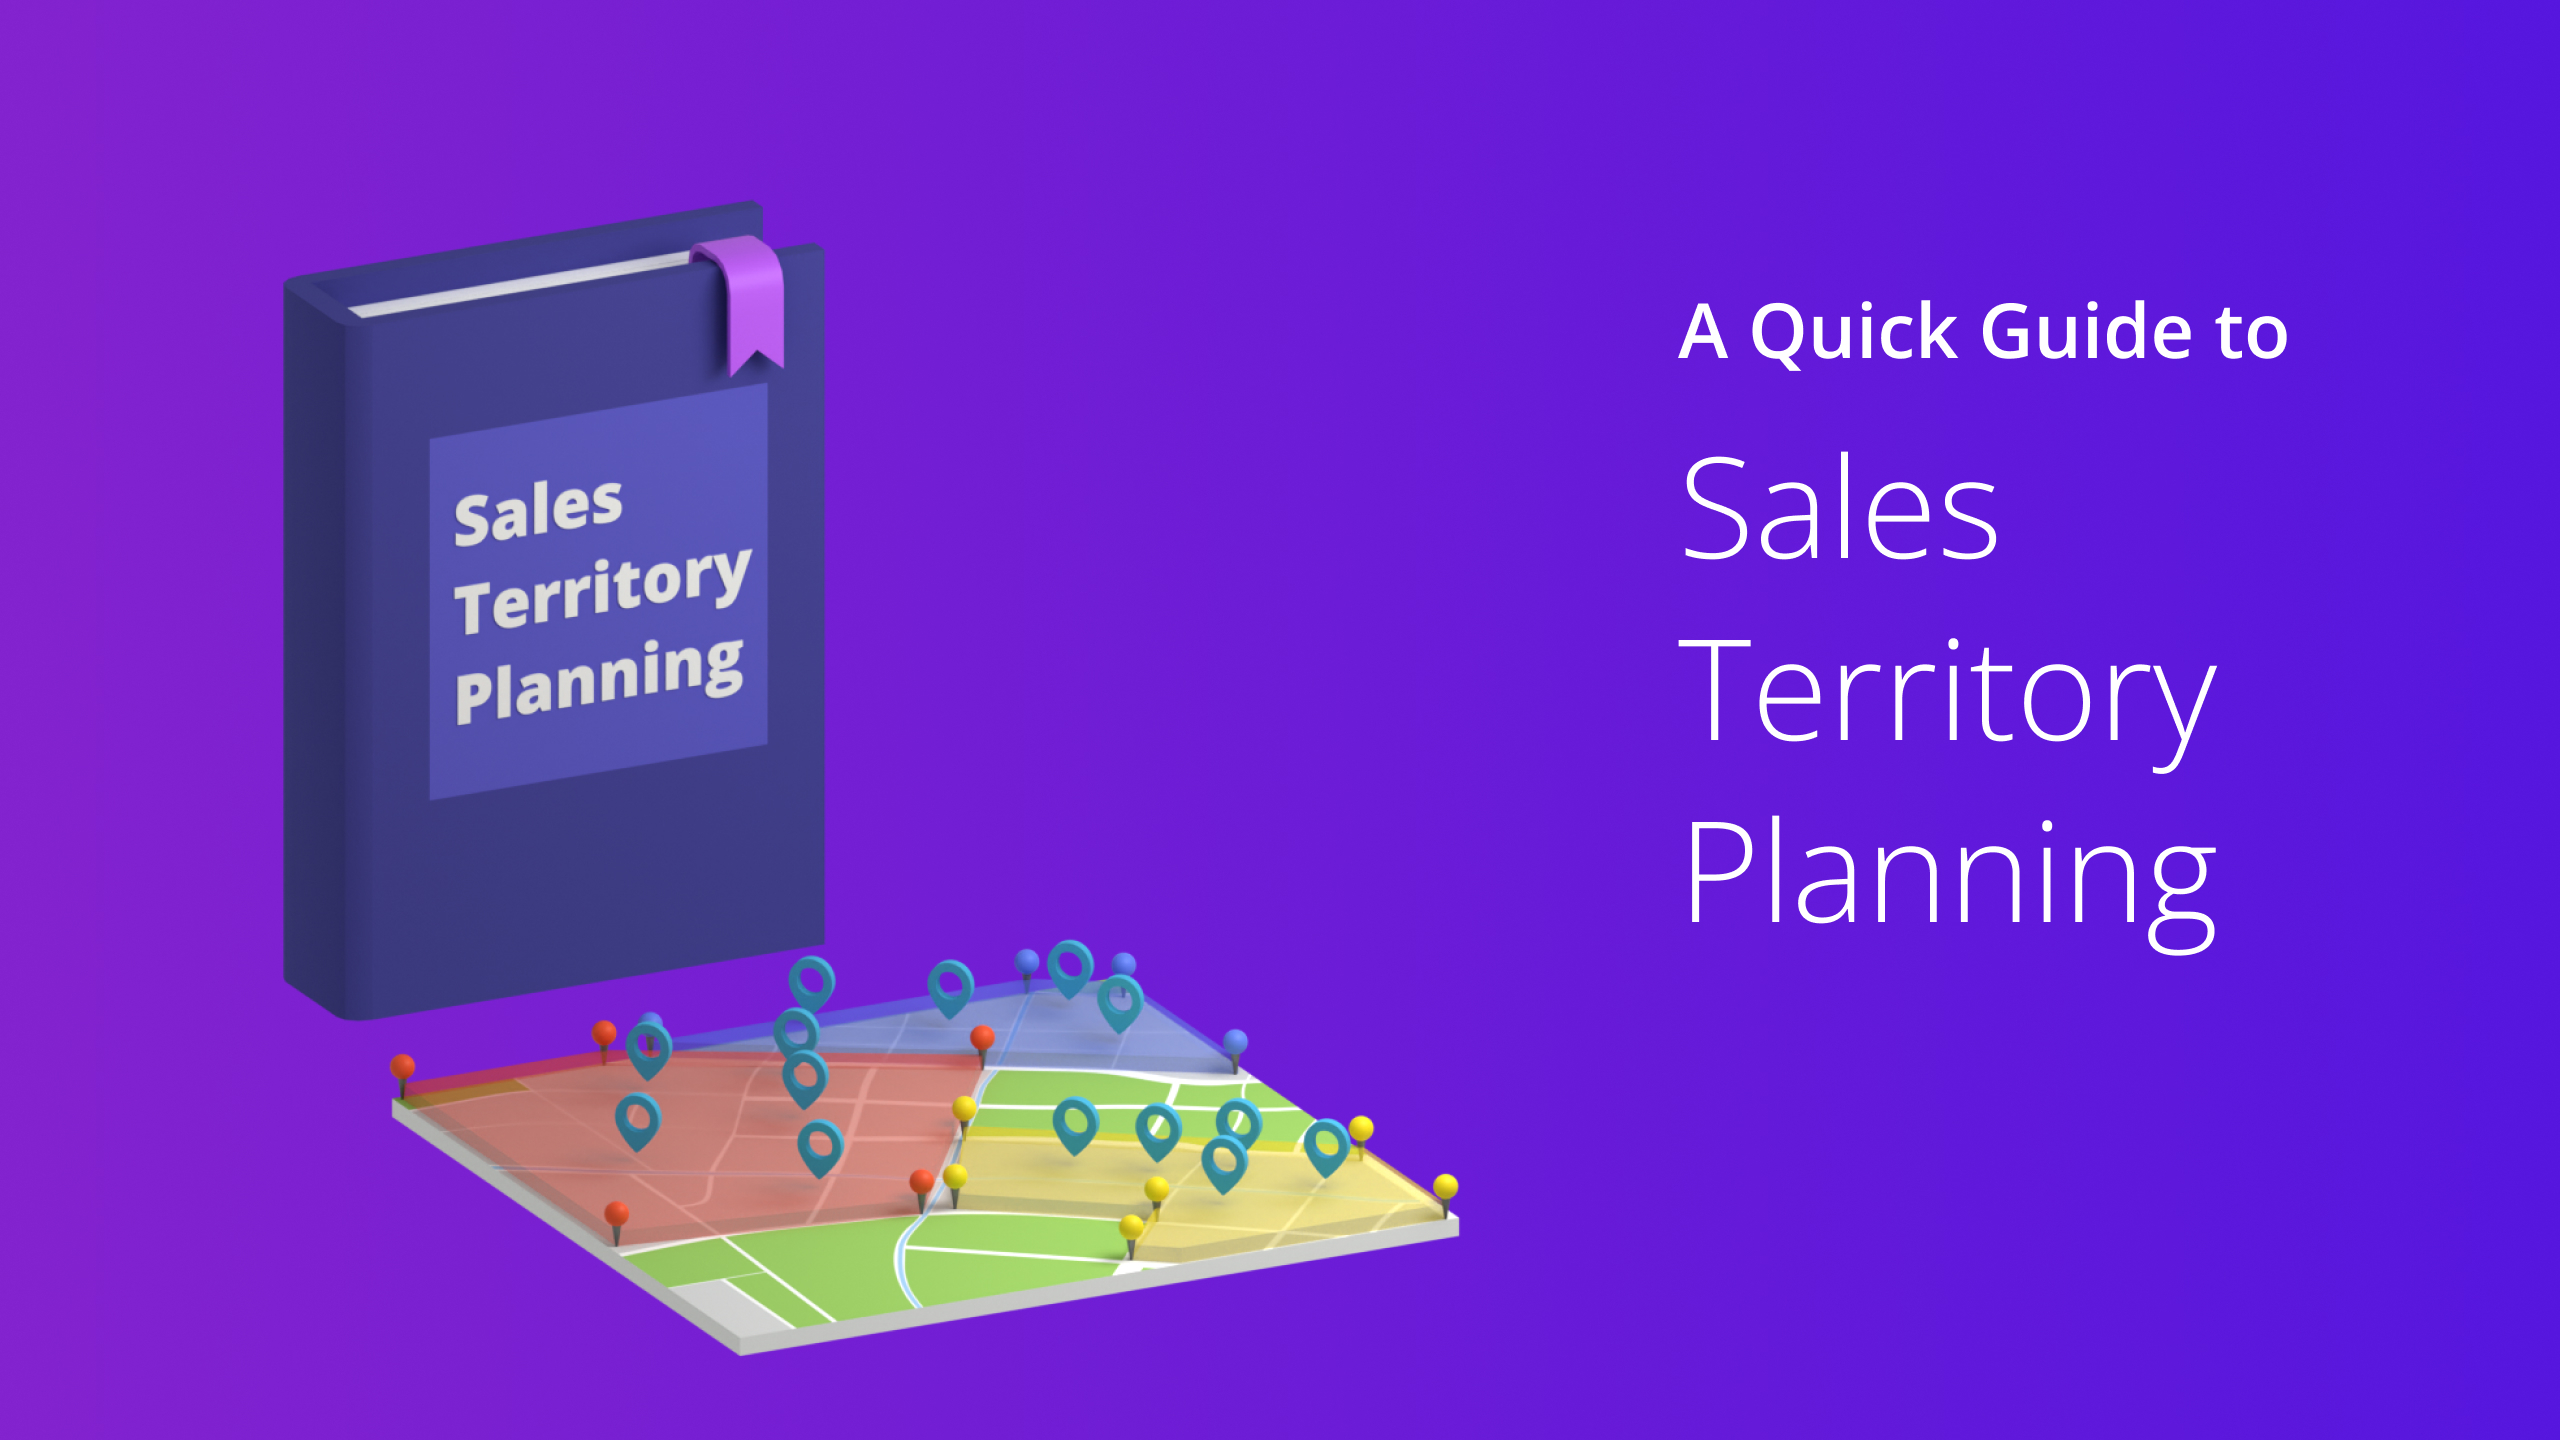 Custom Image Sales Territory Planning